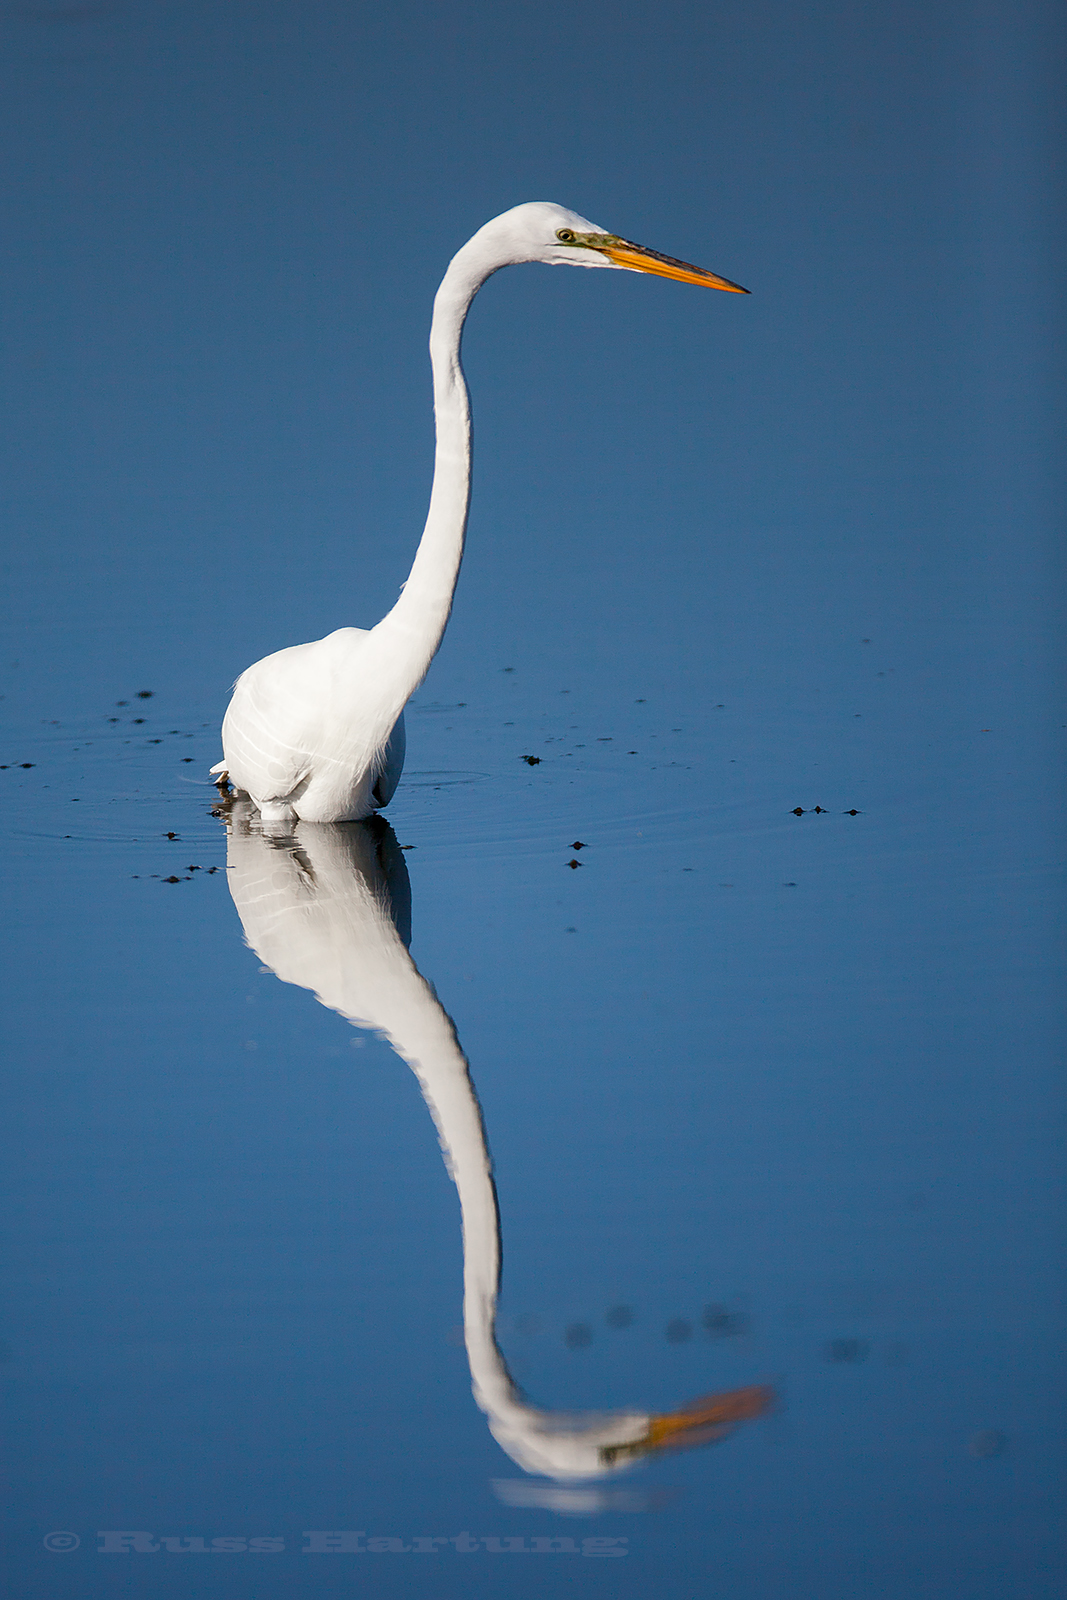 Great Egret fishing in the Orlando Wetlands Park, Florida during Spring migration. 